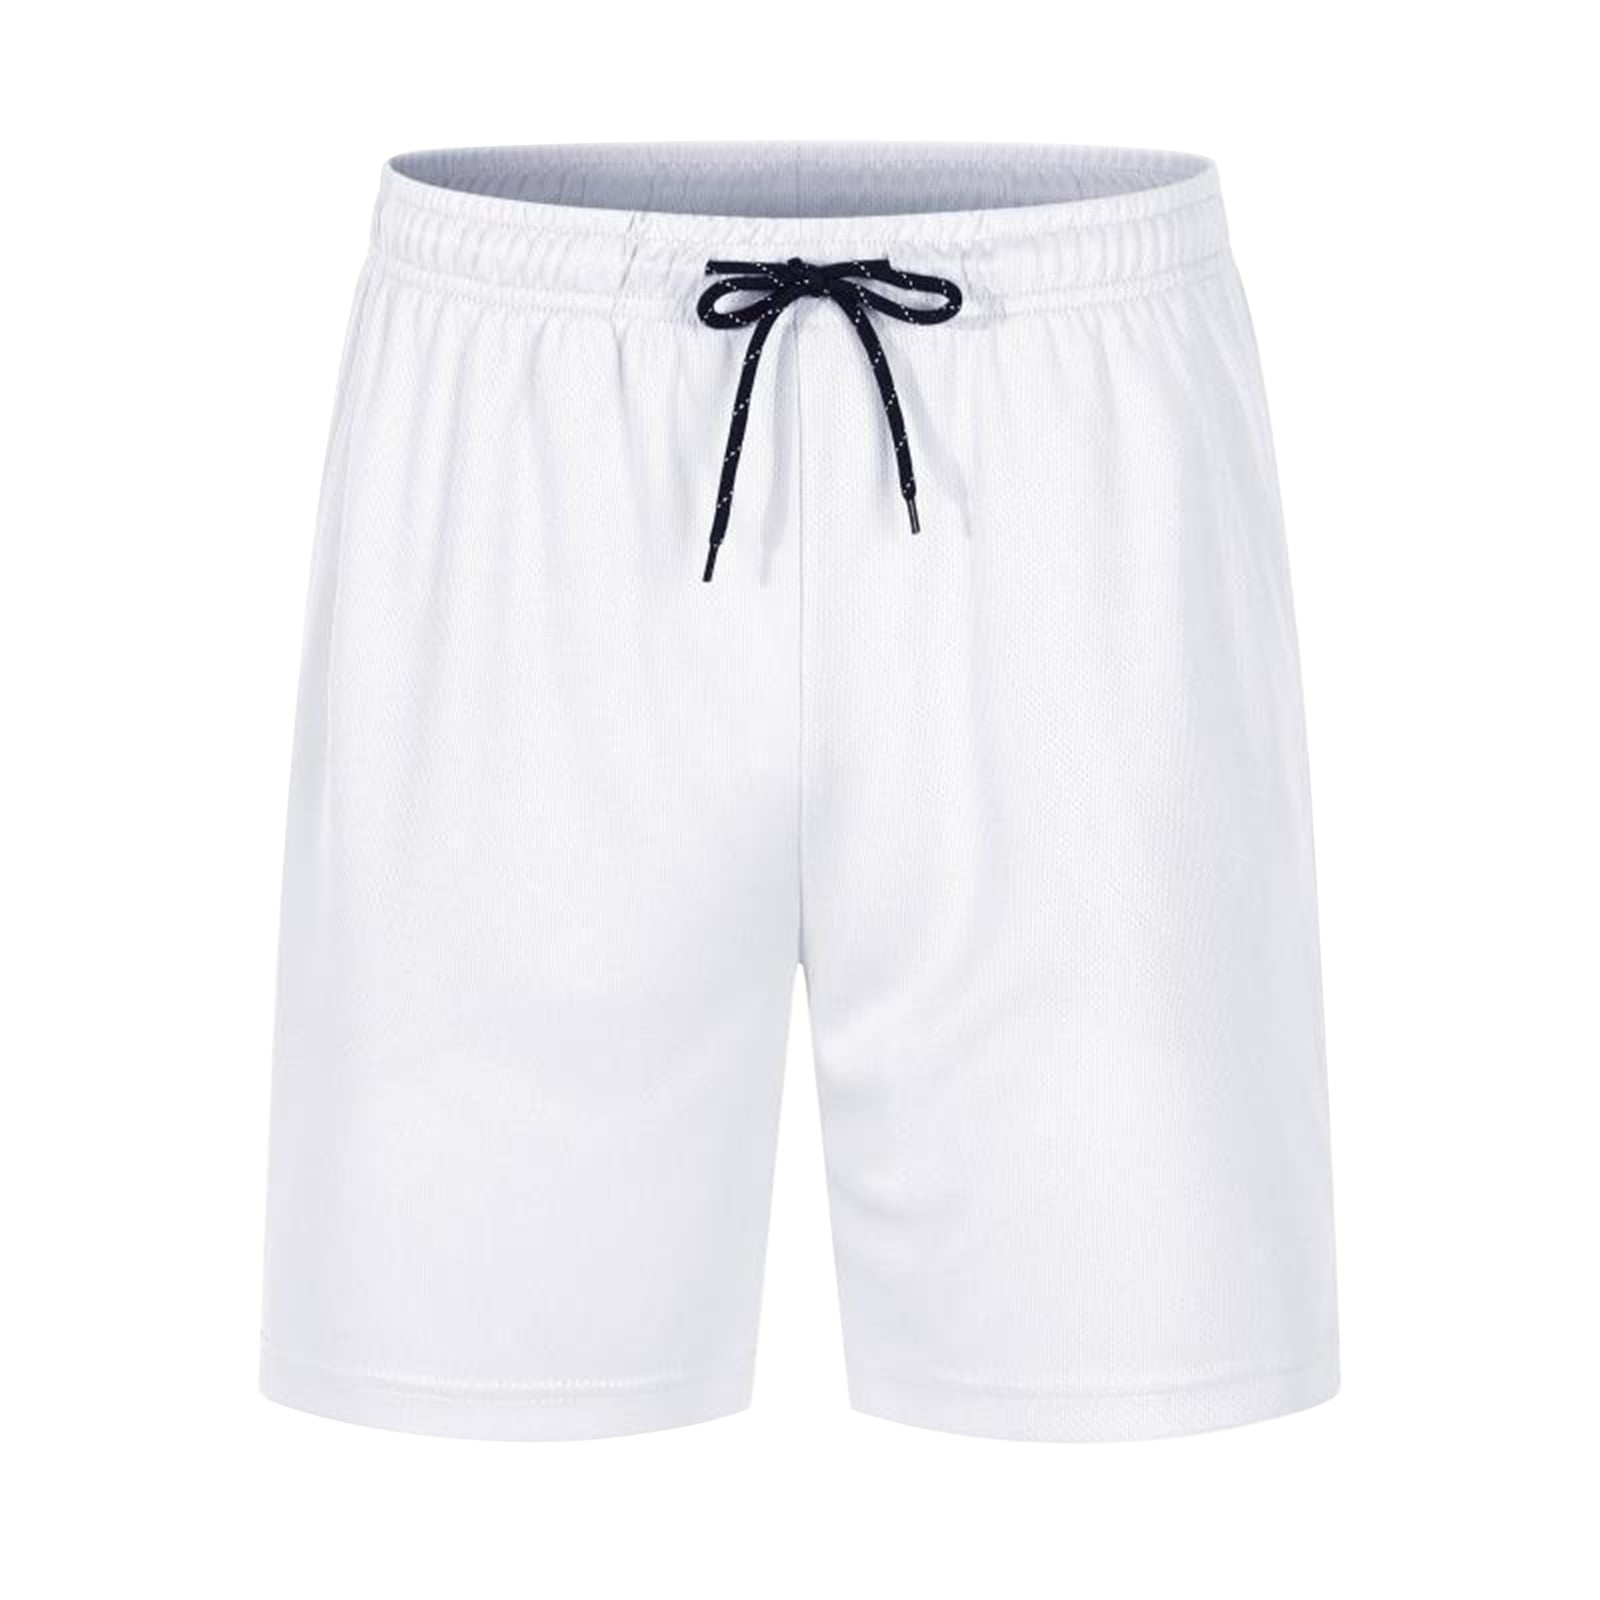 Sports shorts for men